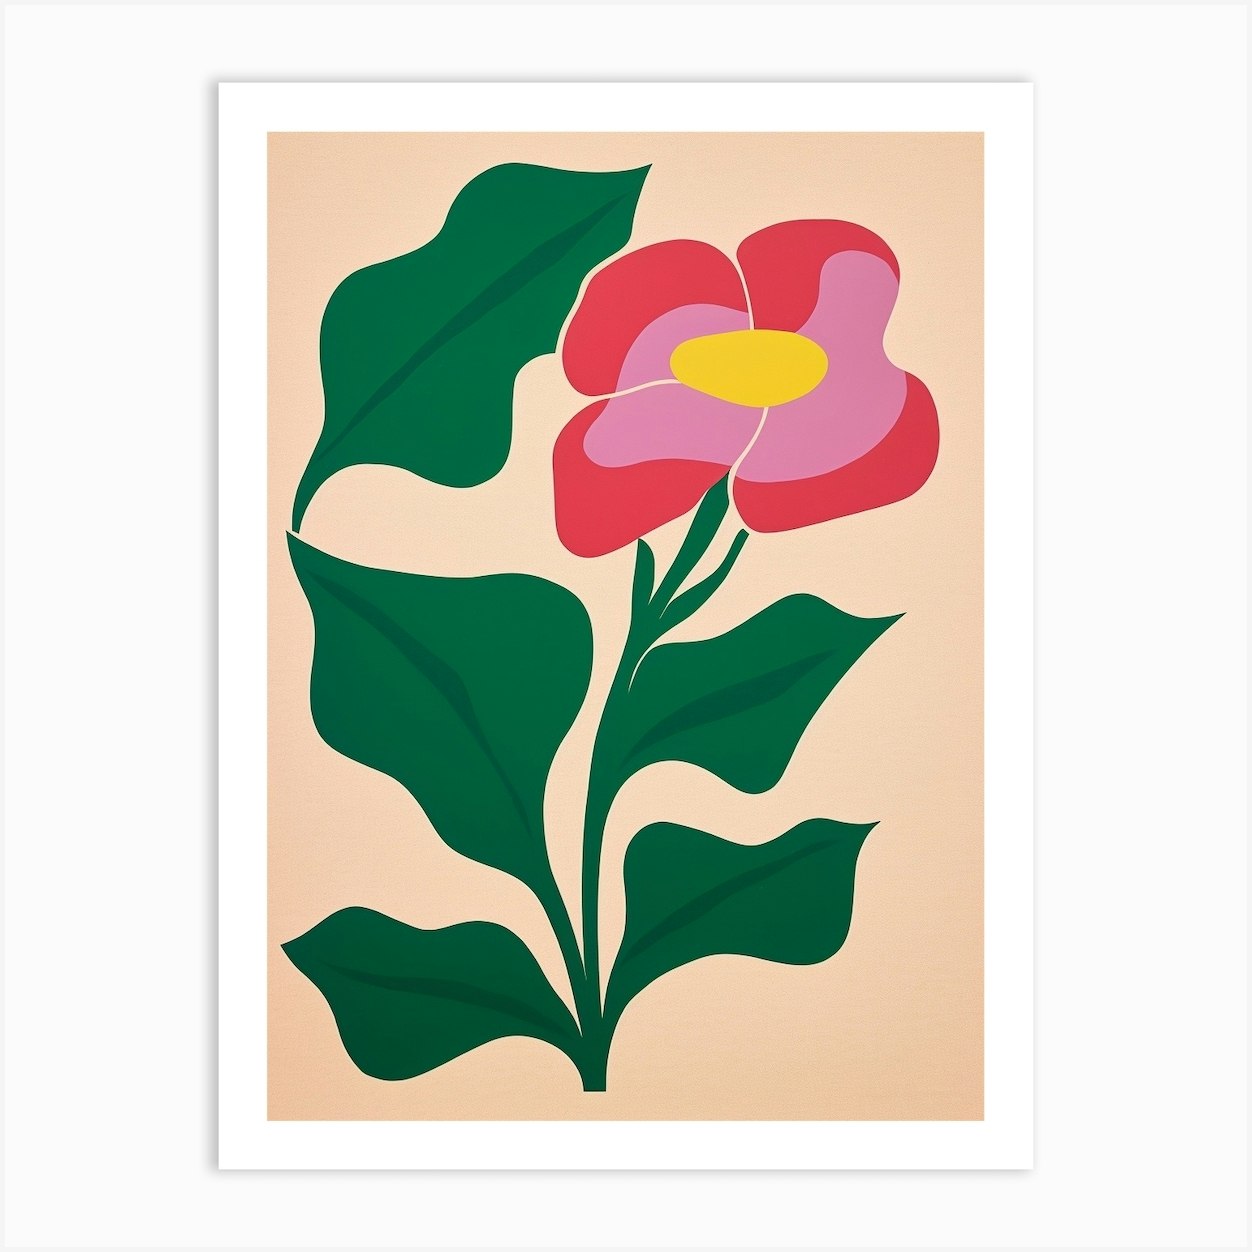 Cut Out Style Flower Art Calla Lily 2 Art Print by Botanic Studio - Fy